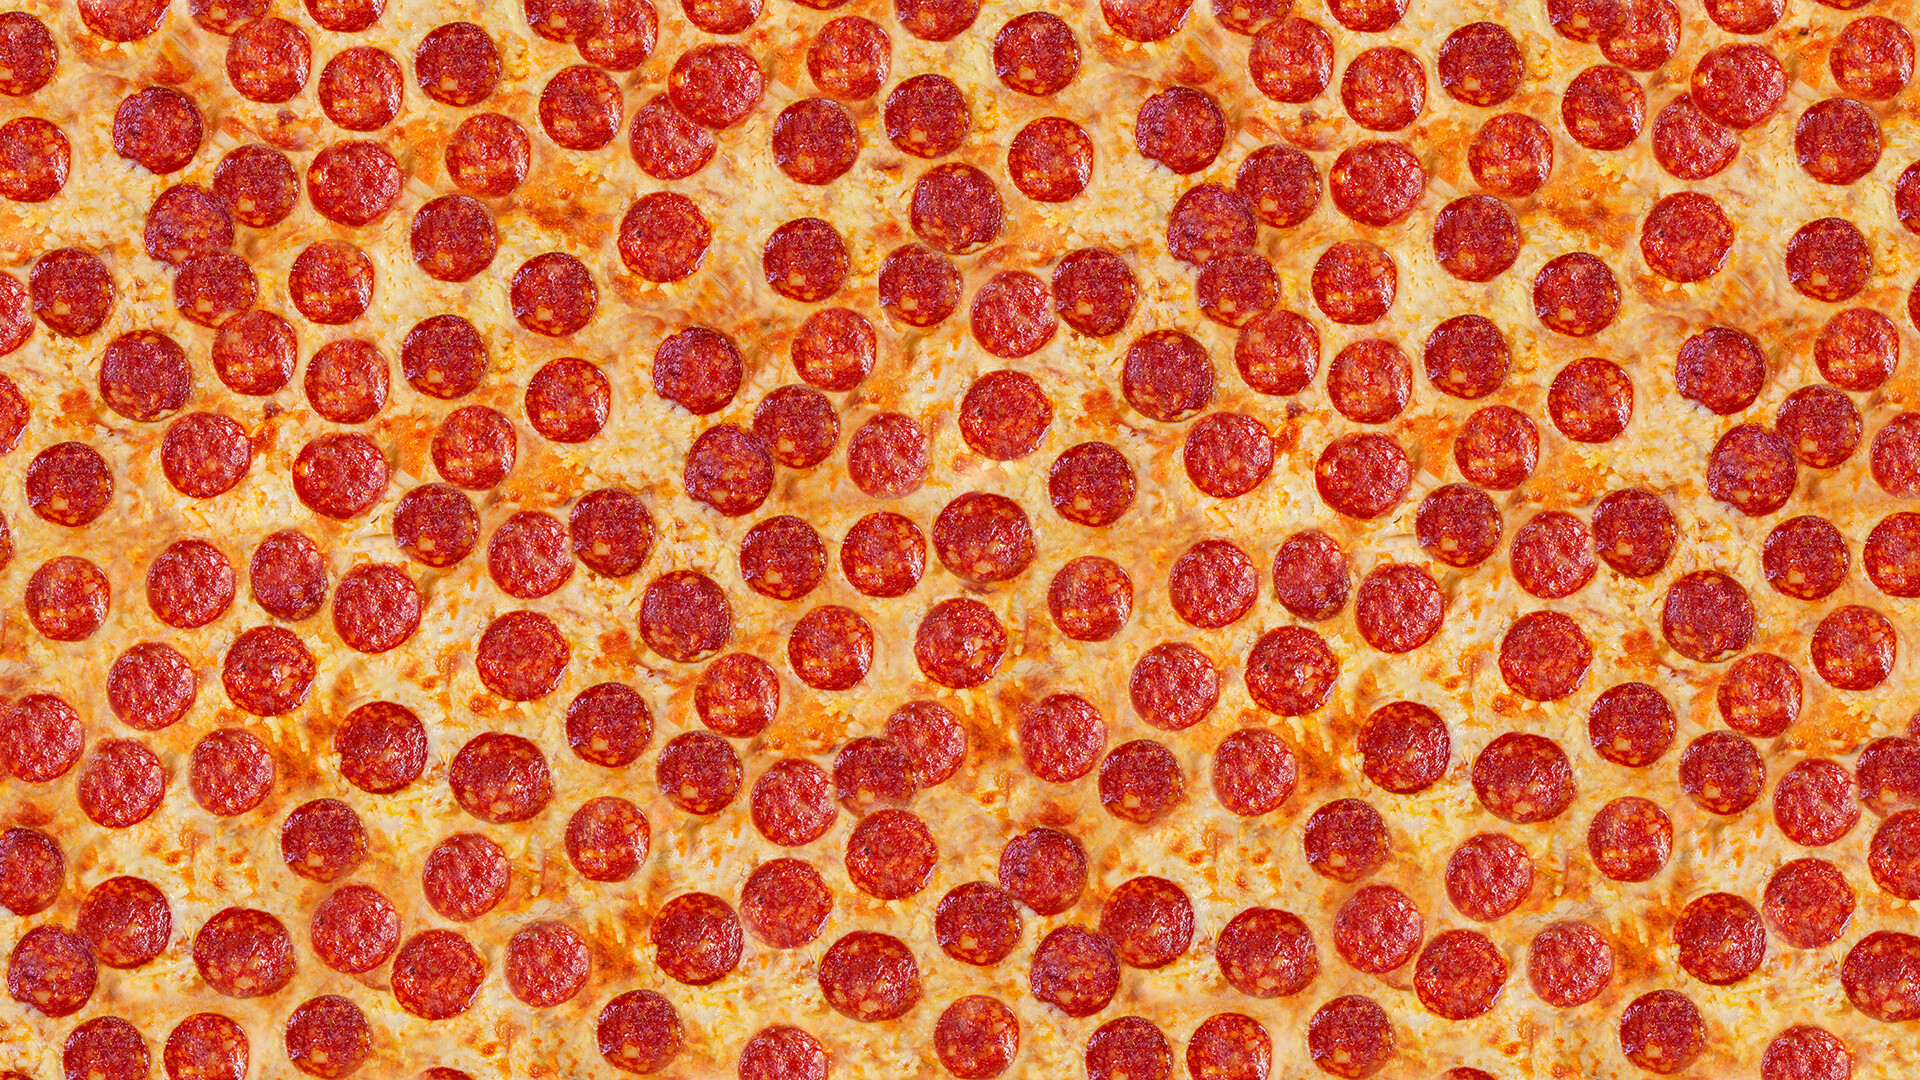 Pizza: The world's favorite fast food, Salami, Mozzarella. 1920x1080 Full HD Wallpaper.